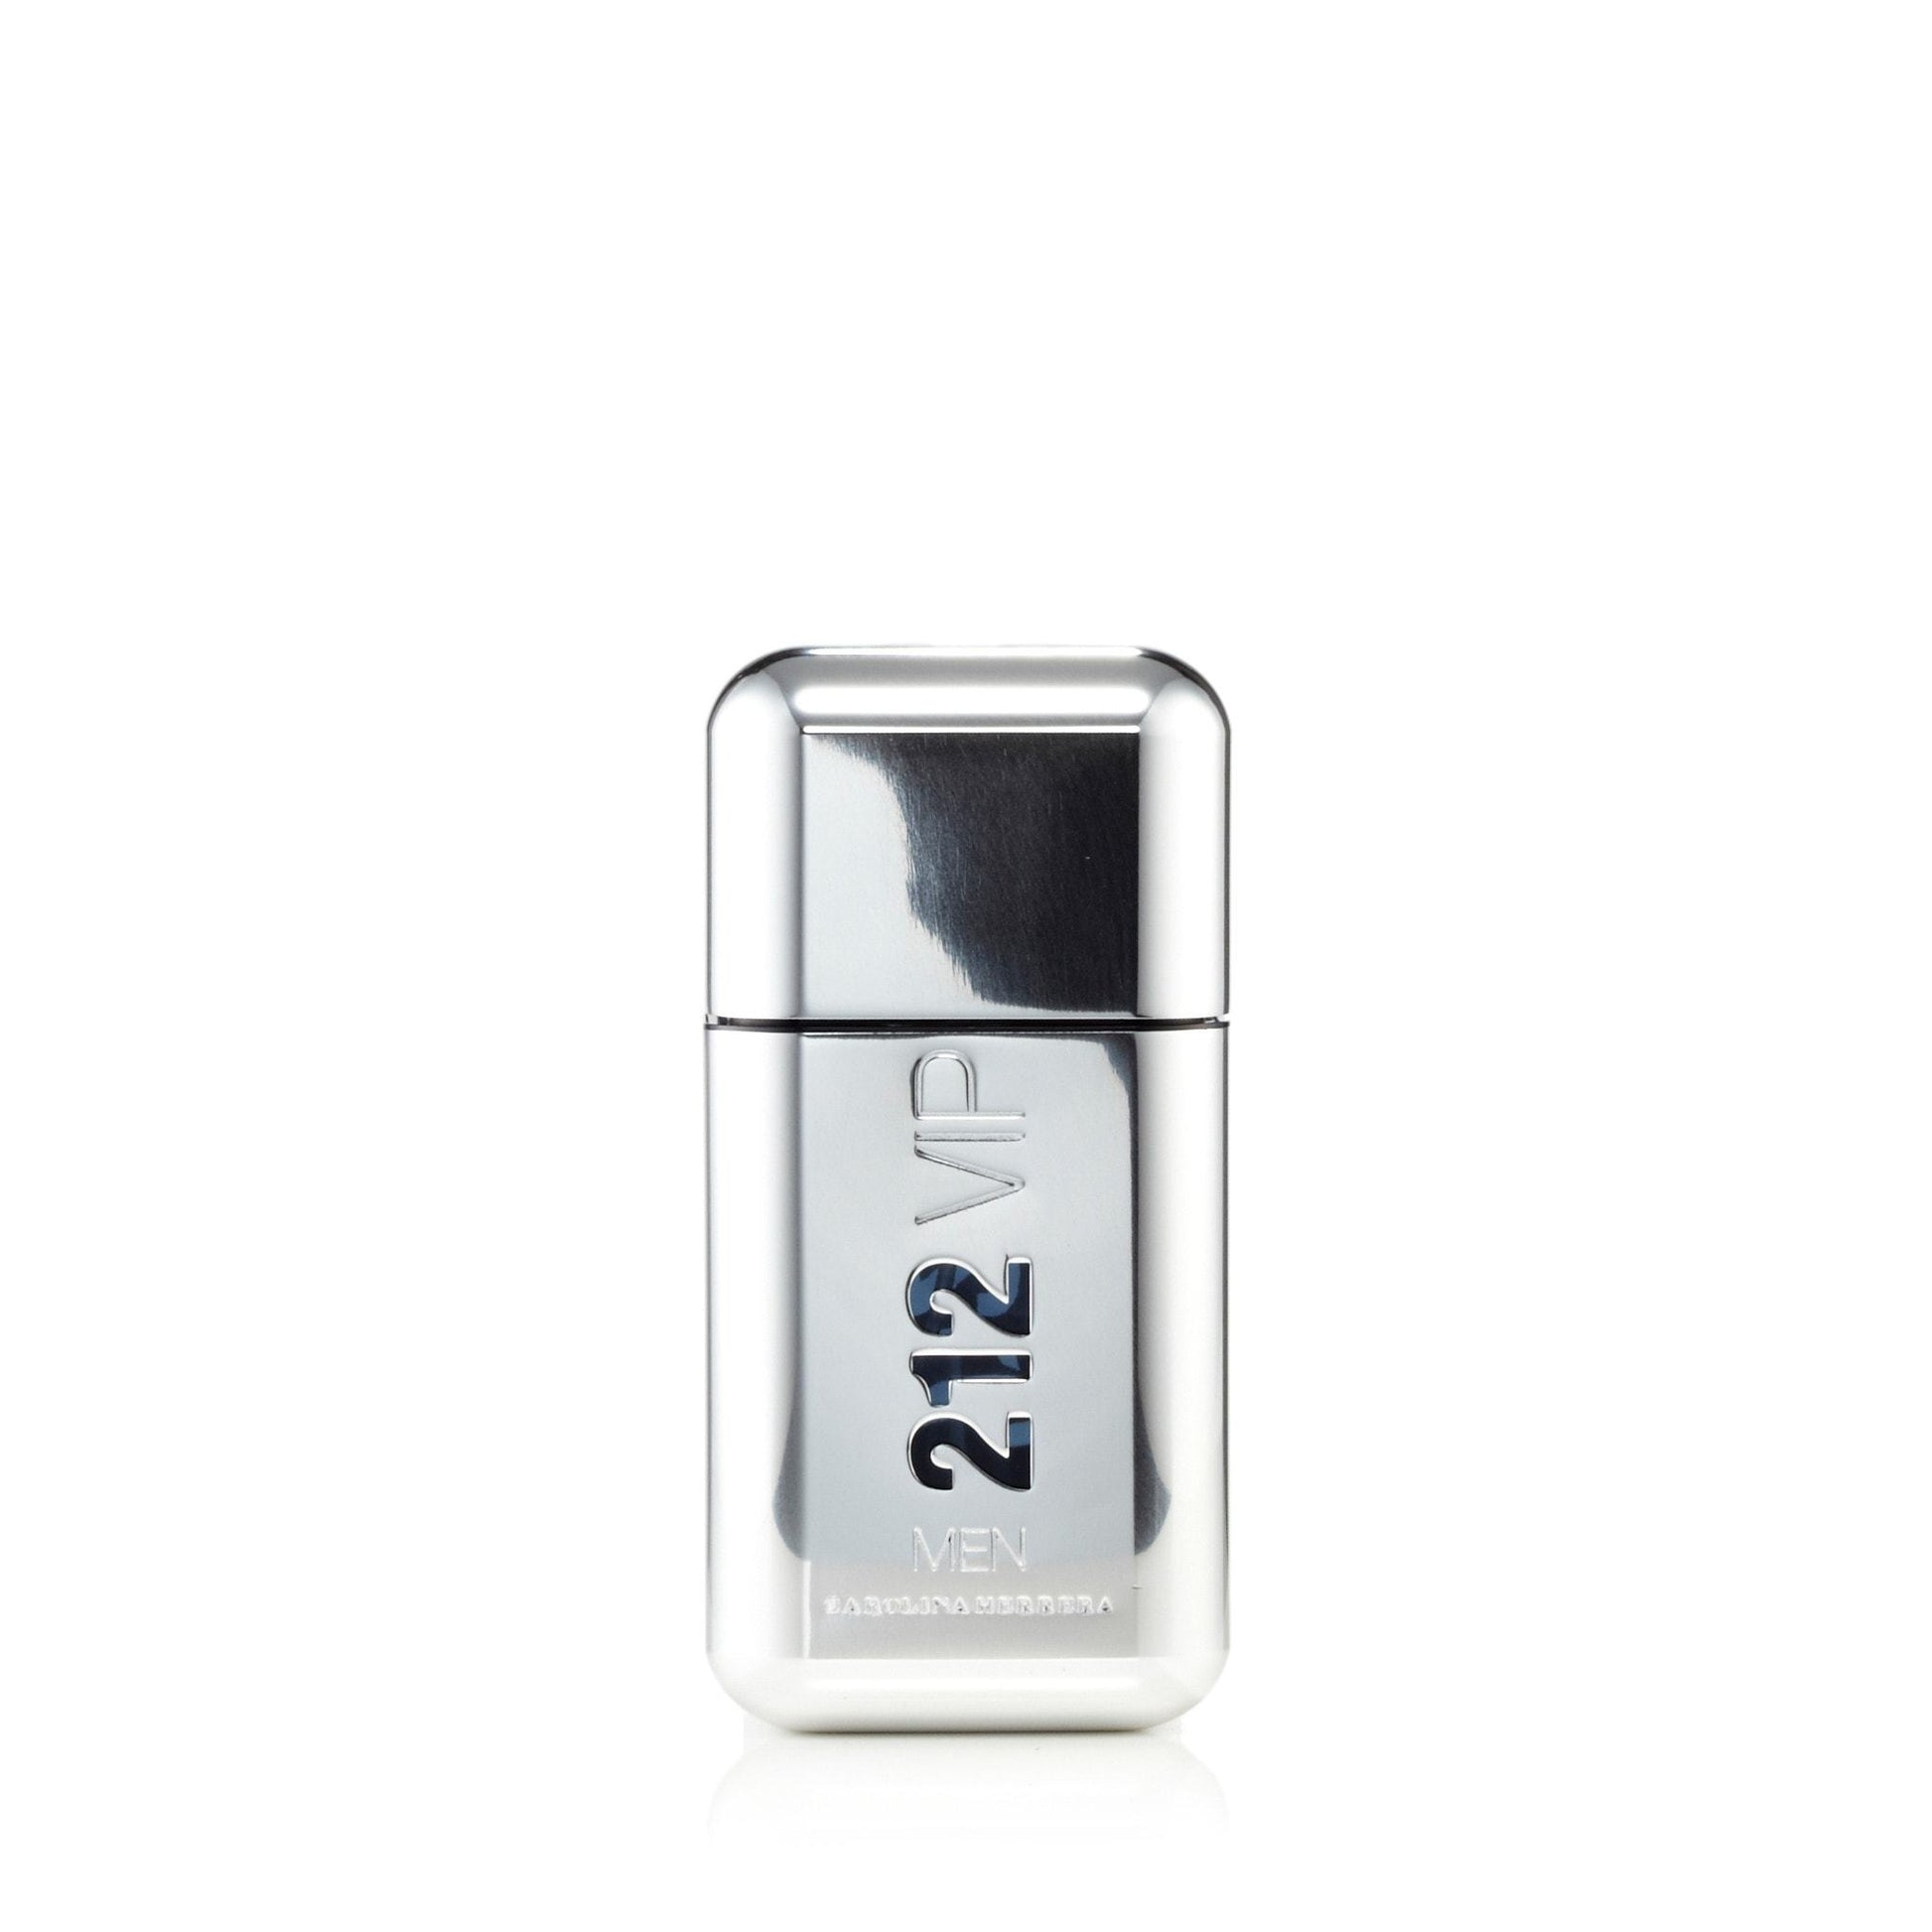 212 Vip Men Eau de Toilette Spray for Men by Carolina Herrera, Product image 5